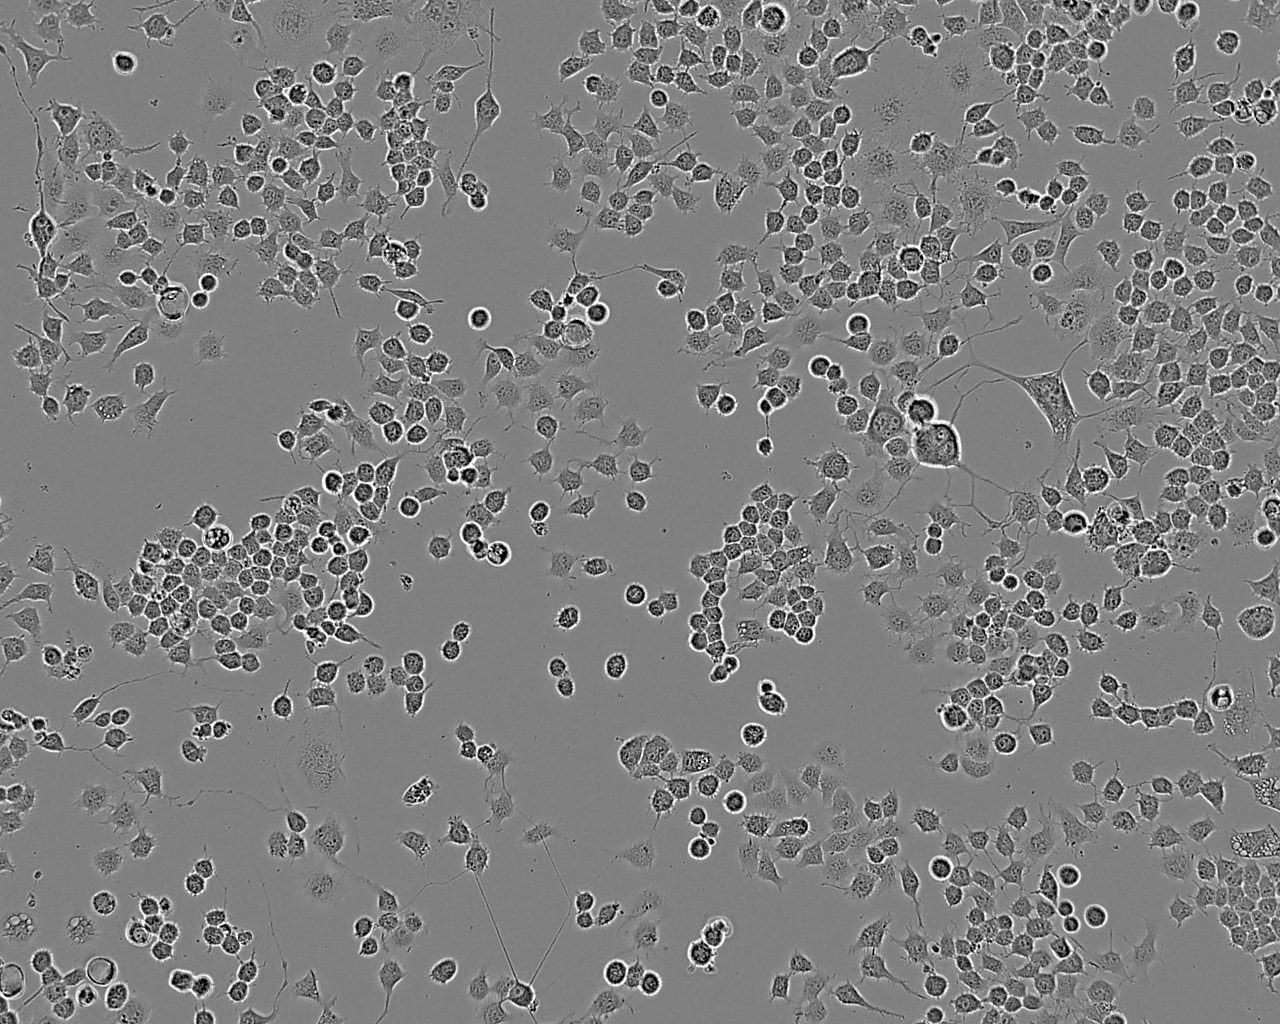 M059J Cells|人脑神经胶质瘤细胞系,M059J Cells